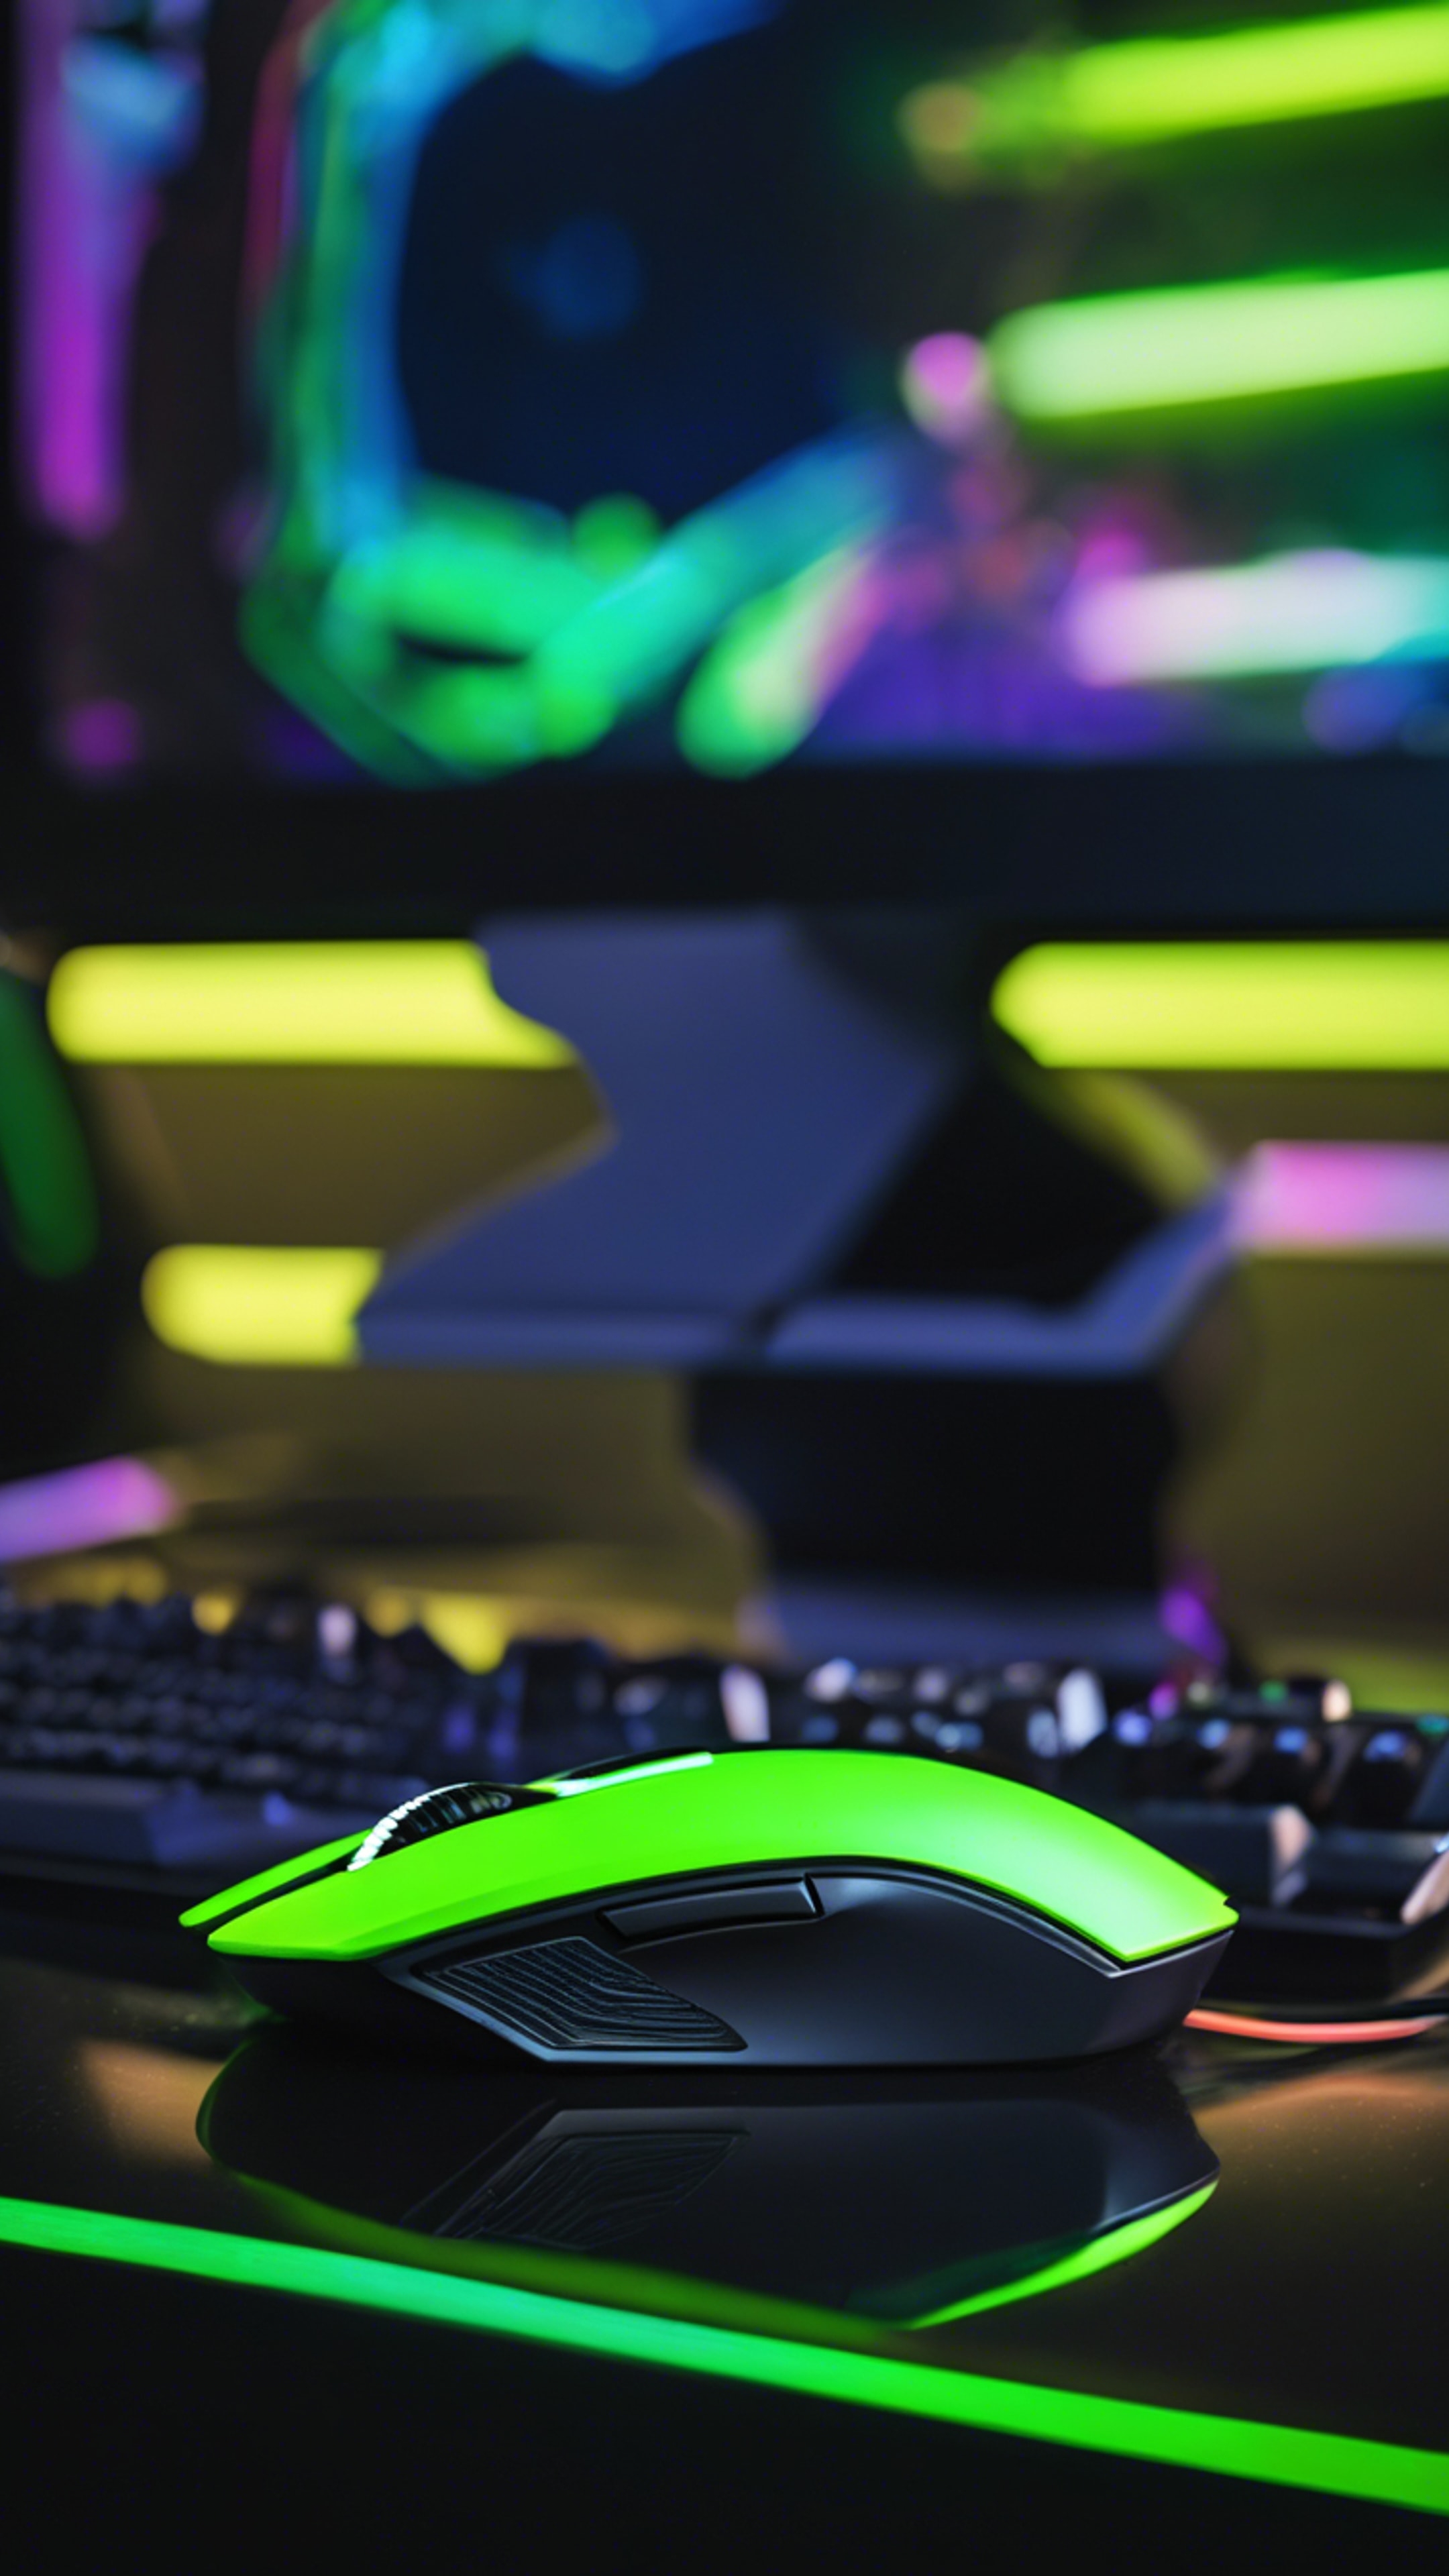 A cool neon green high-tech gaming mouse on a futuristic black desk setup. Tapéta[6d2a2b9049aa4c81a995]